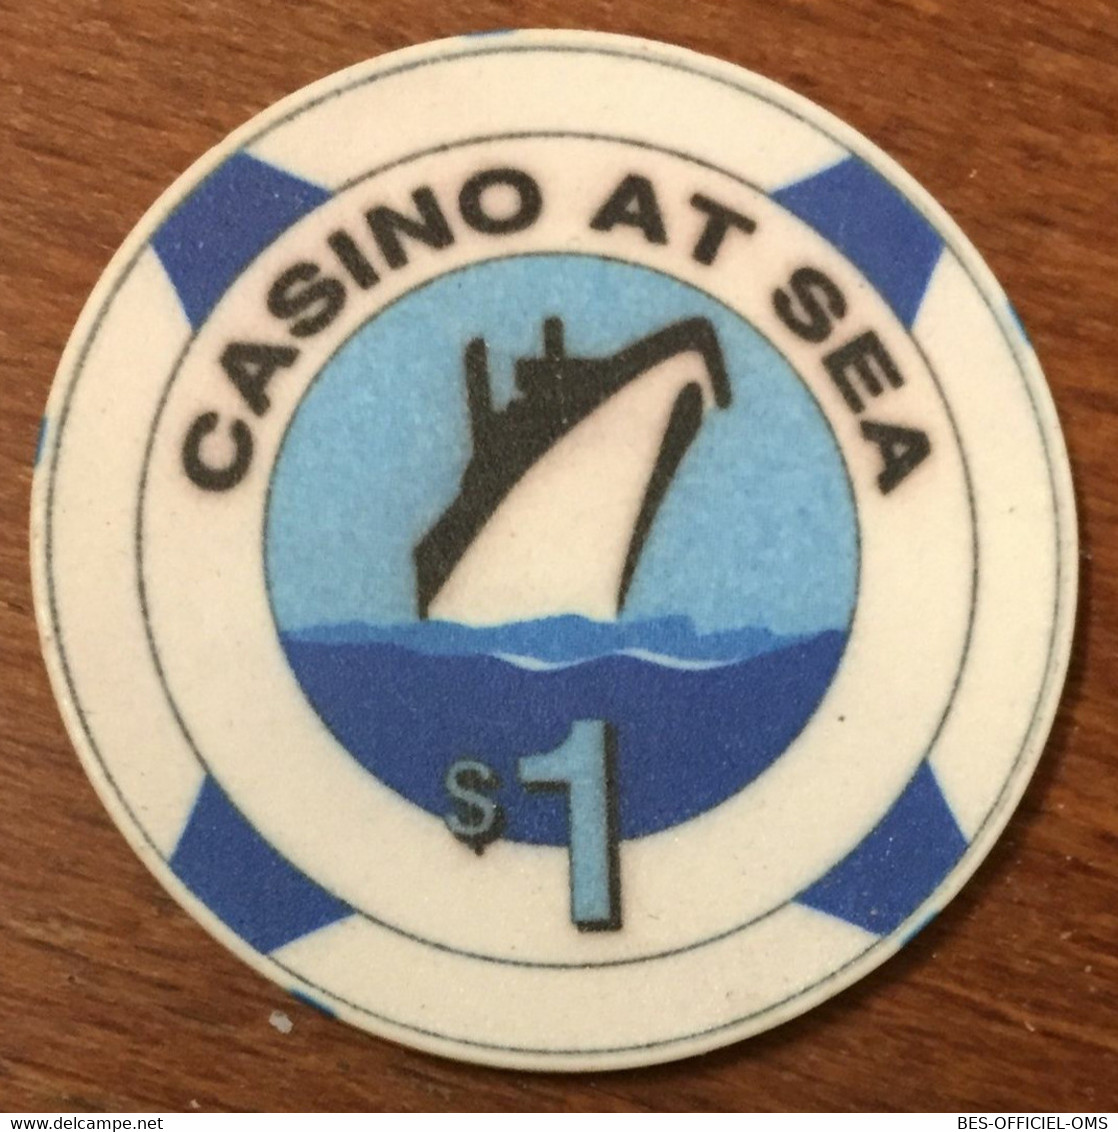 ÉTATS-UNIS CASINO AT SEA CHIP $1 JETON TOKENS COINS NAVIRE GAMING - Casino